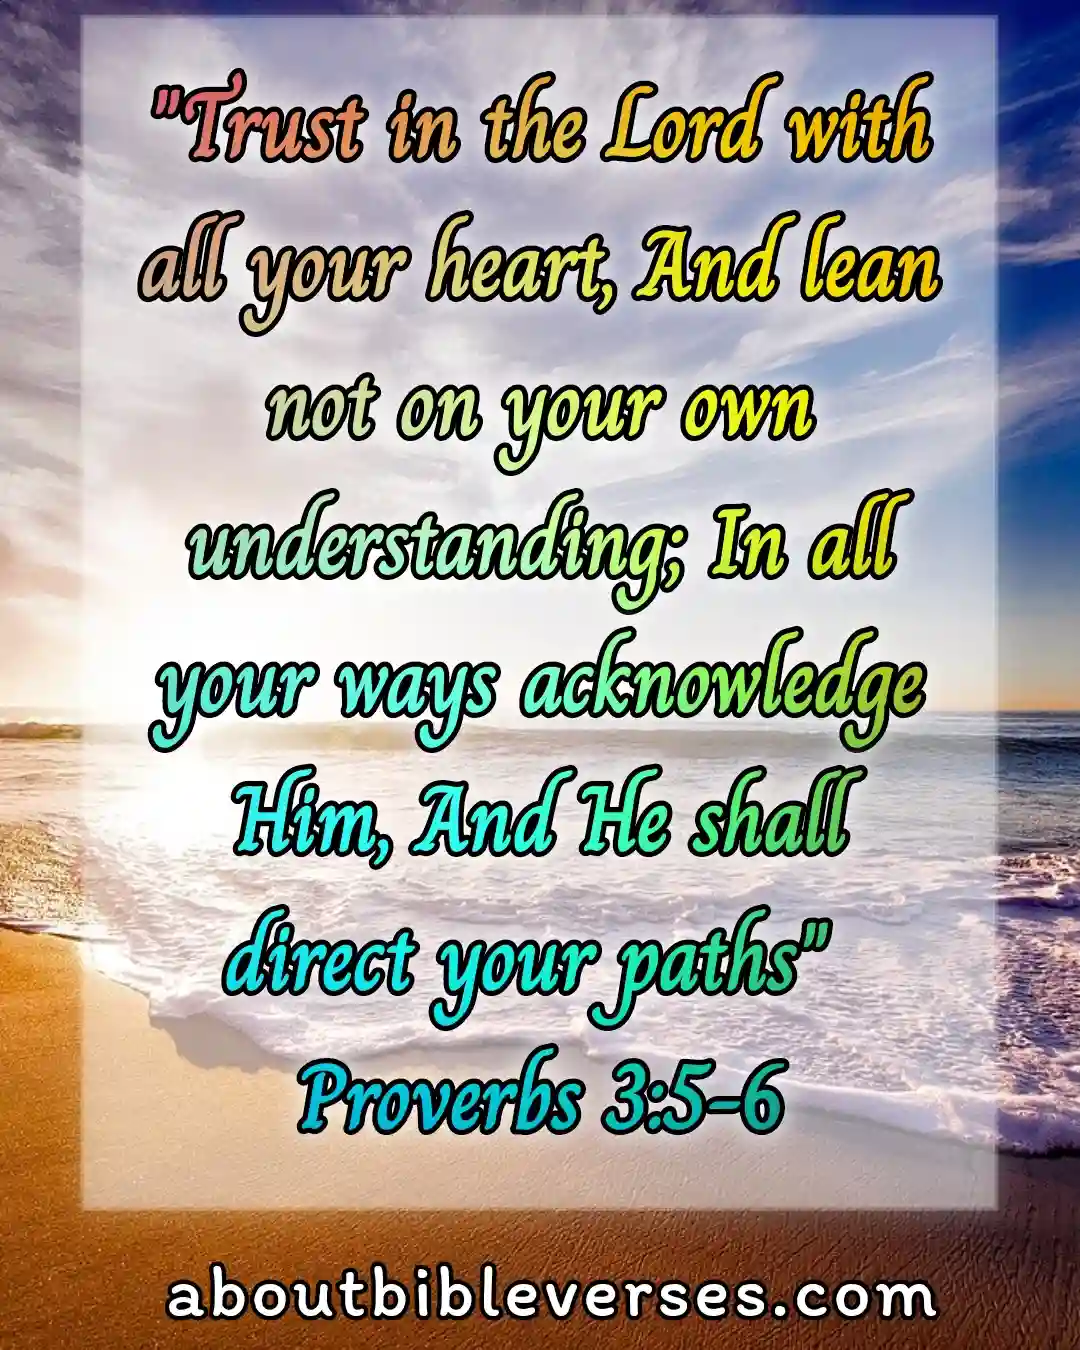 today bible verse (Proverbs 3:5-6)